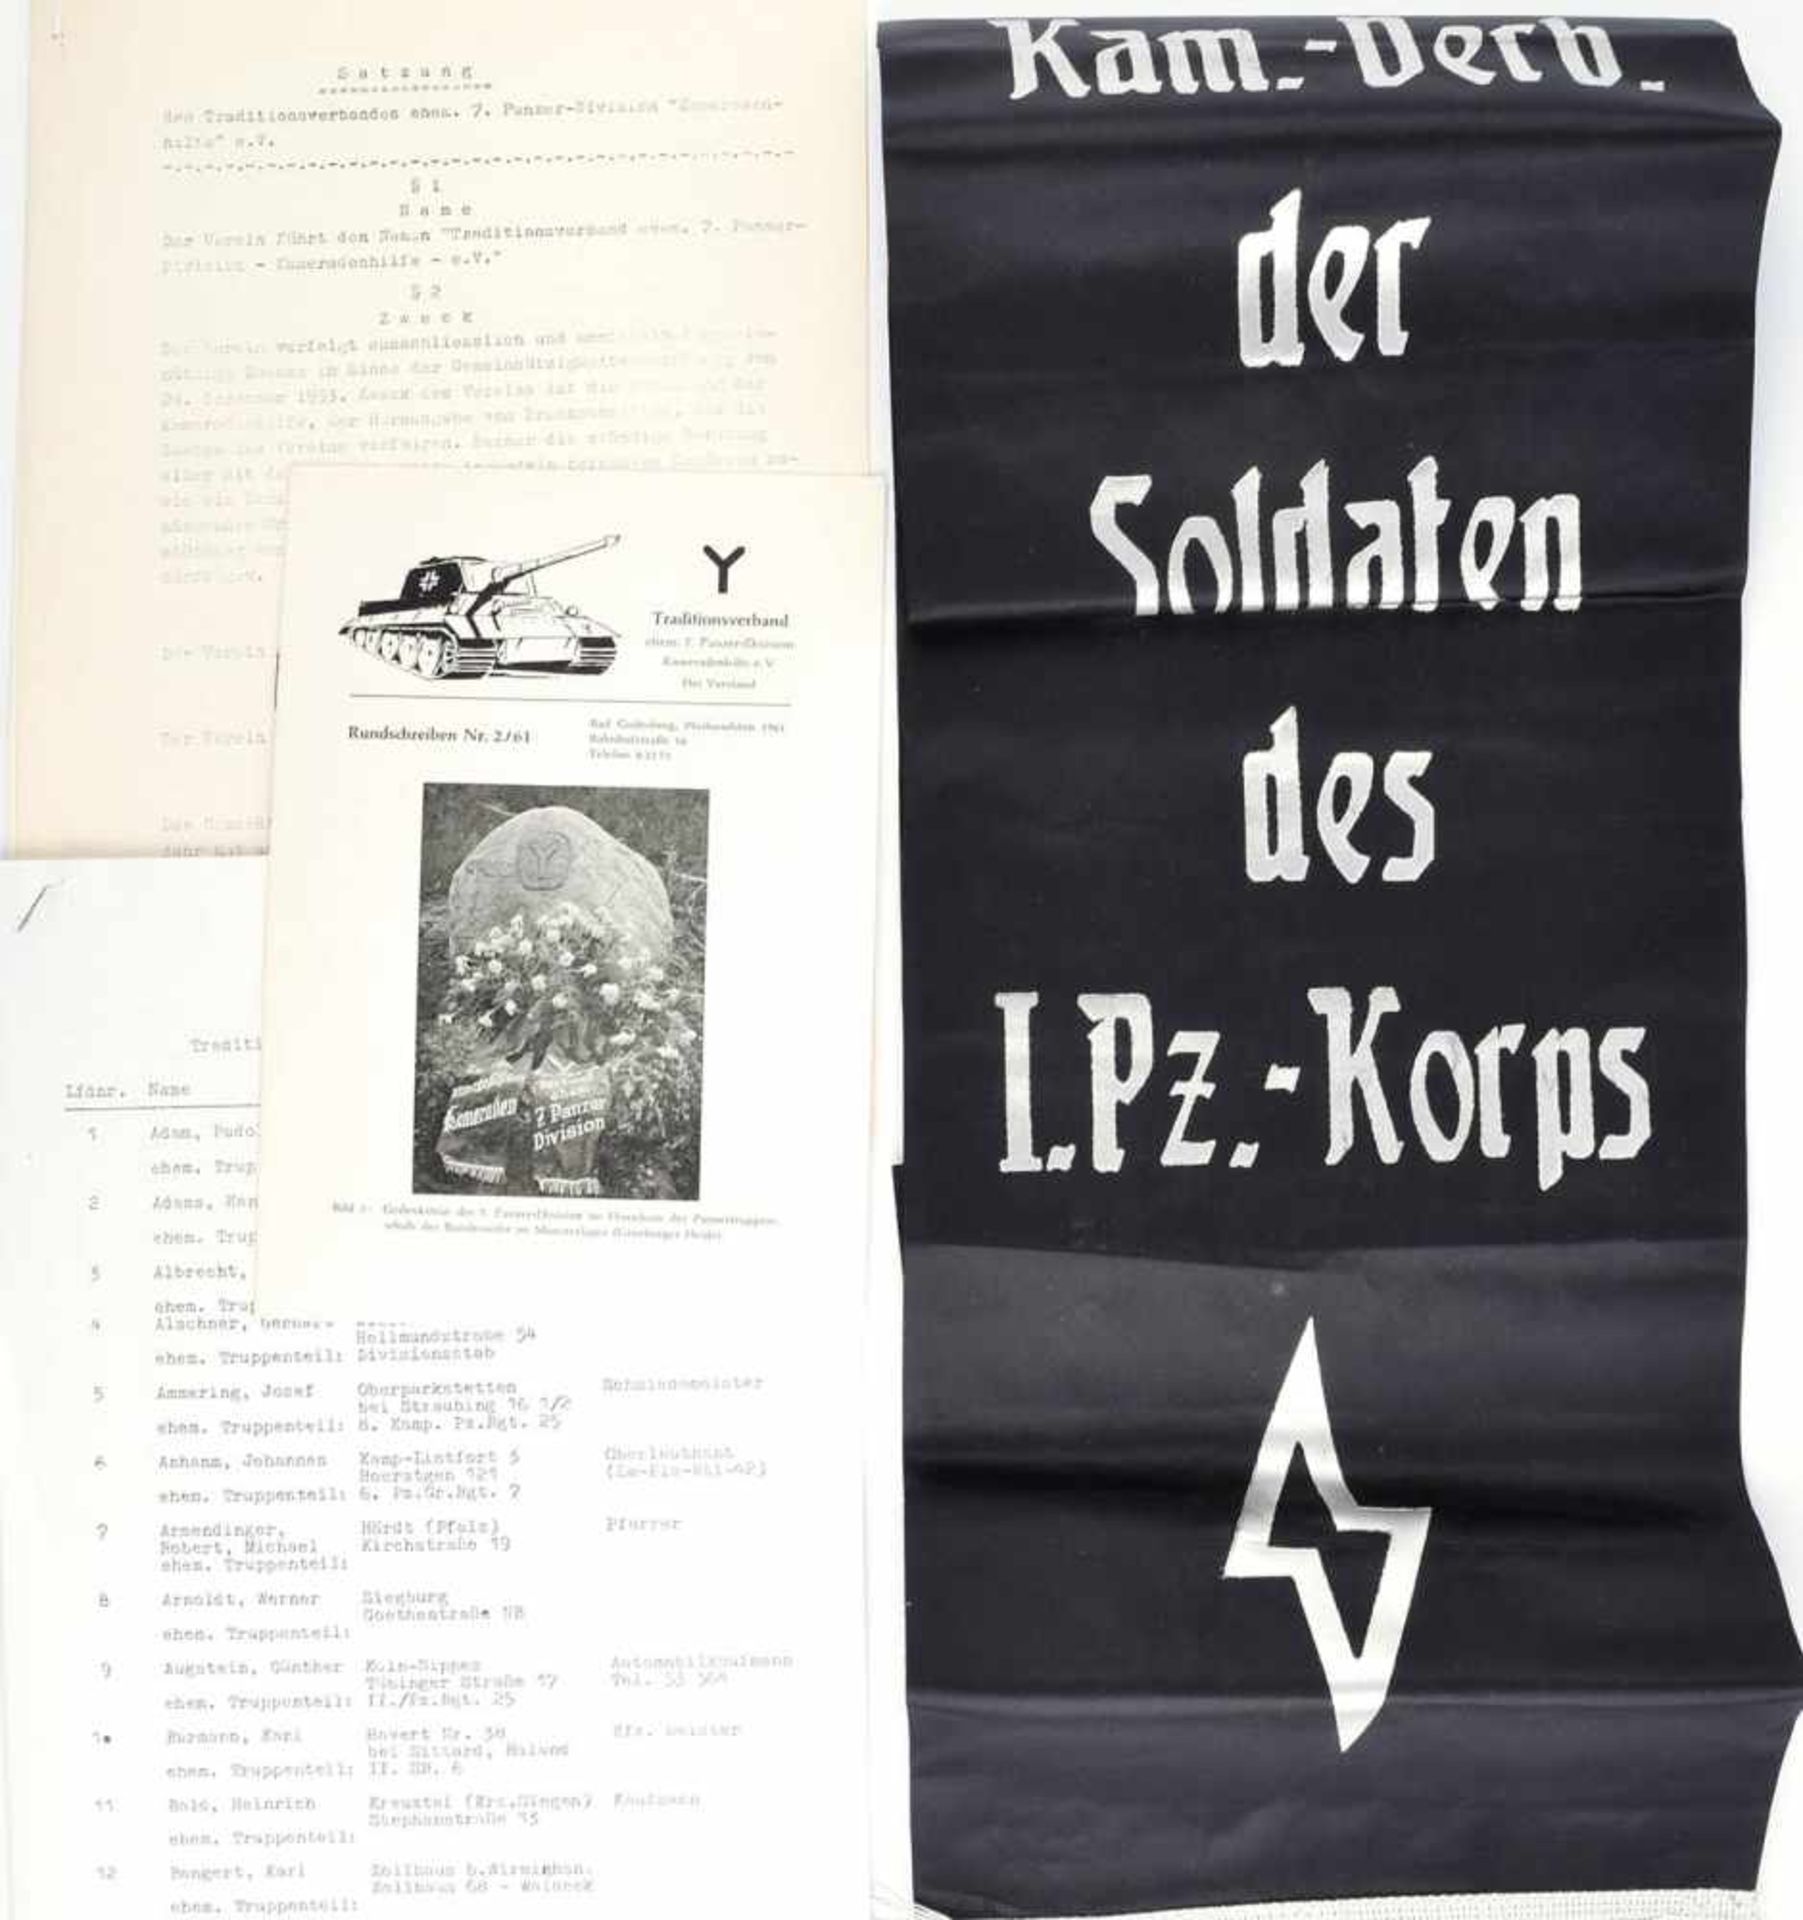 KONVOLUT KAMERADSCHAFT 7. PANZER-DIVISION: Satzung d. Traditionsverbandes, 1956, 4 S.;